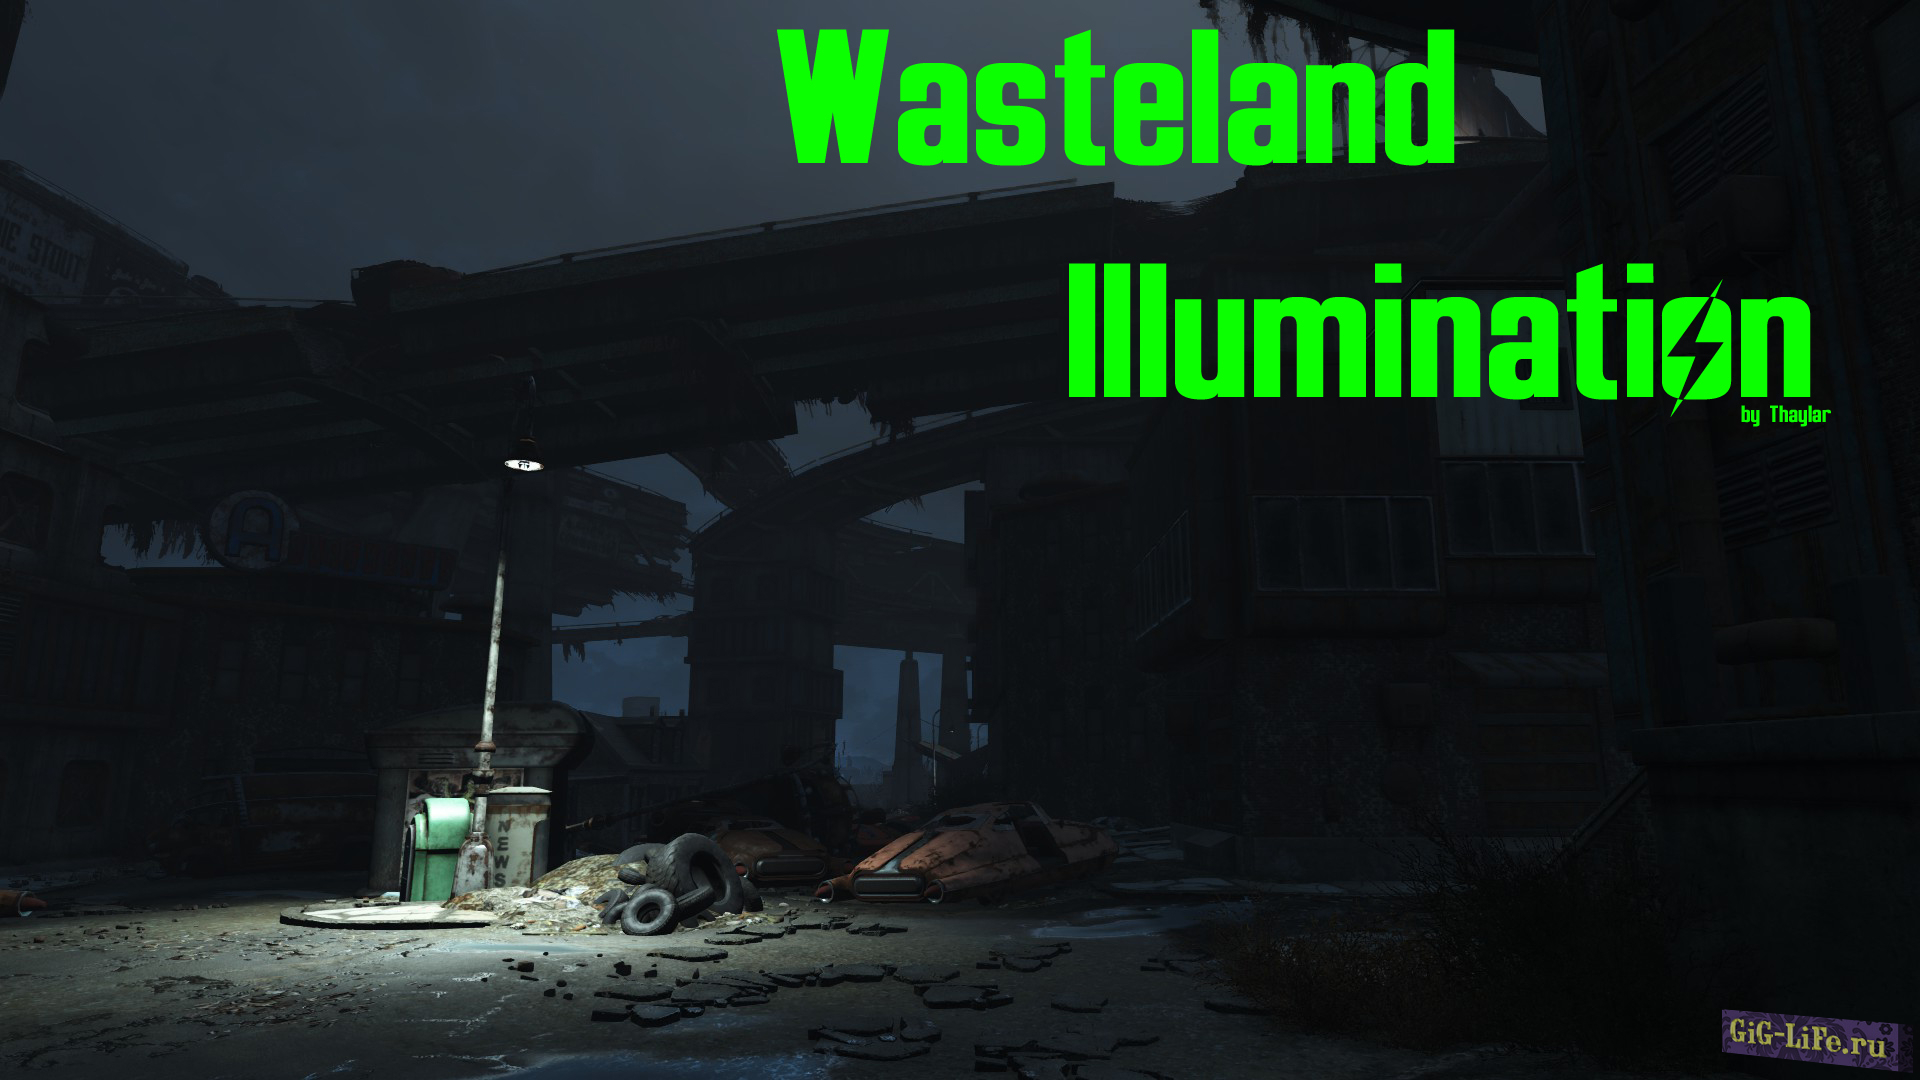 Fallout 4 — Освещение Пустоши / Wasteland Illumination